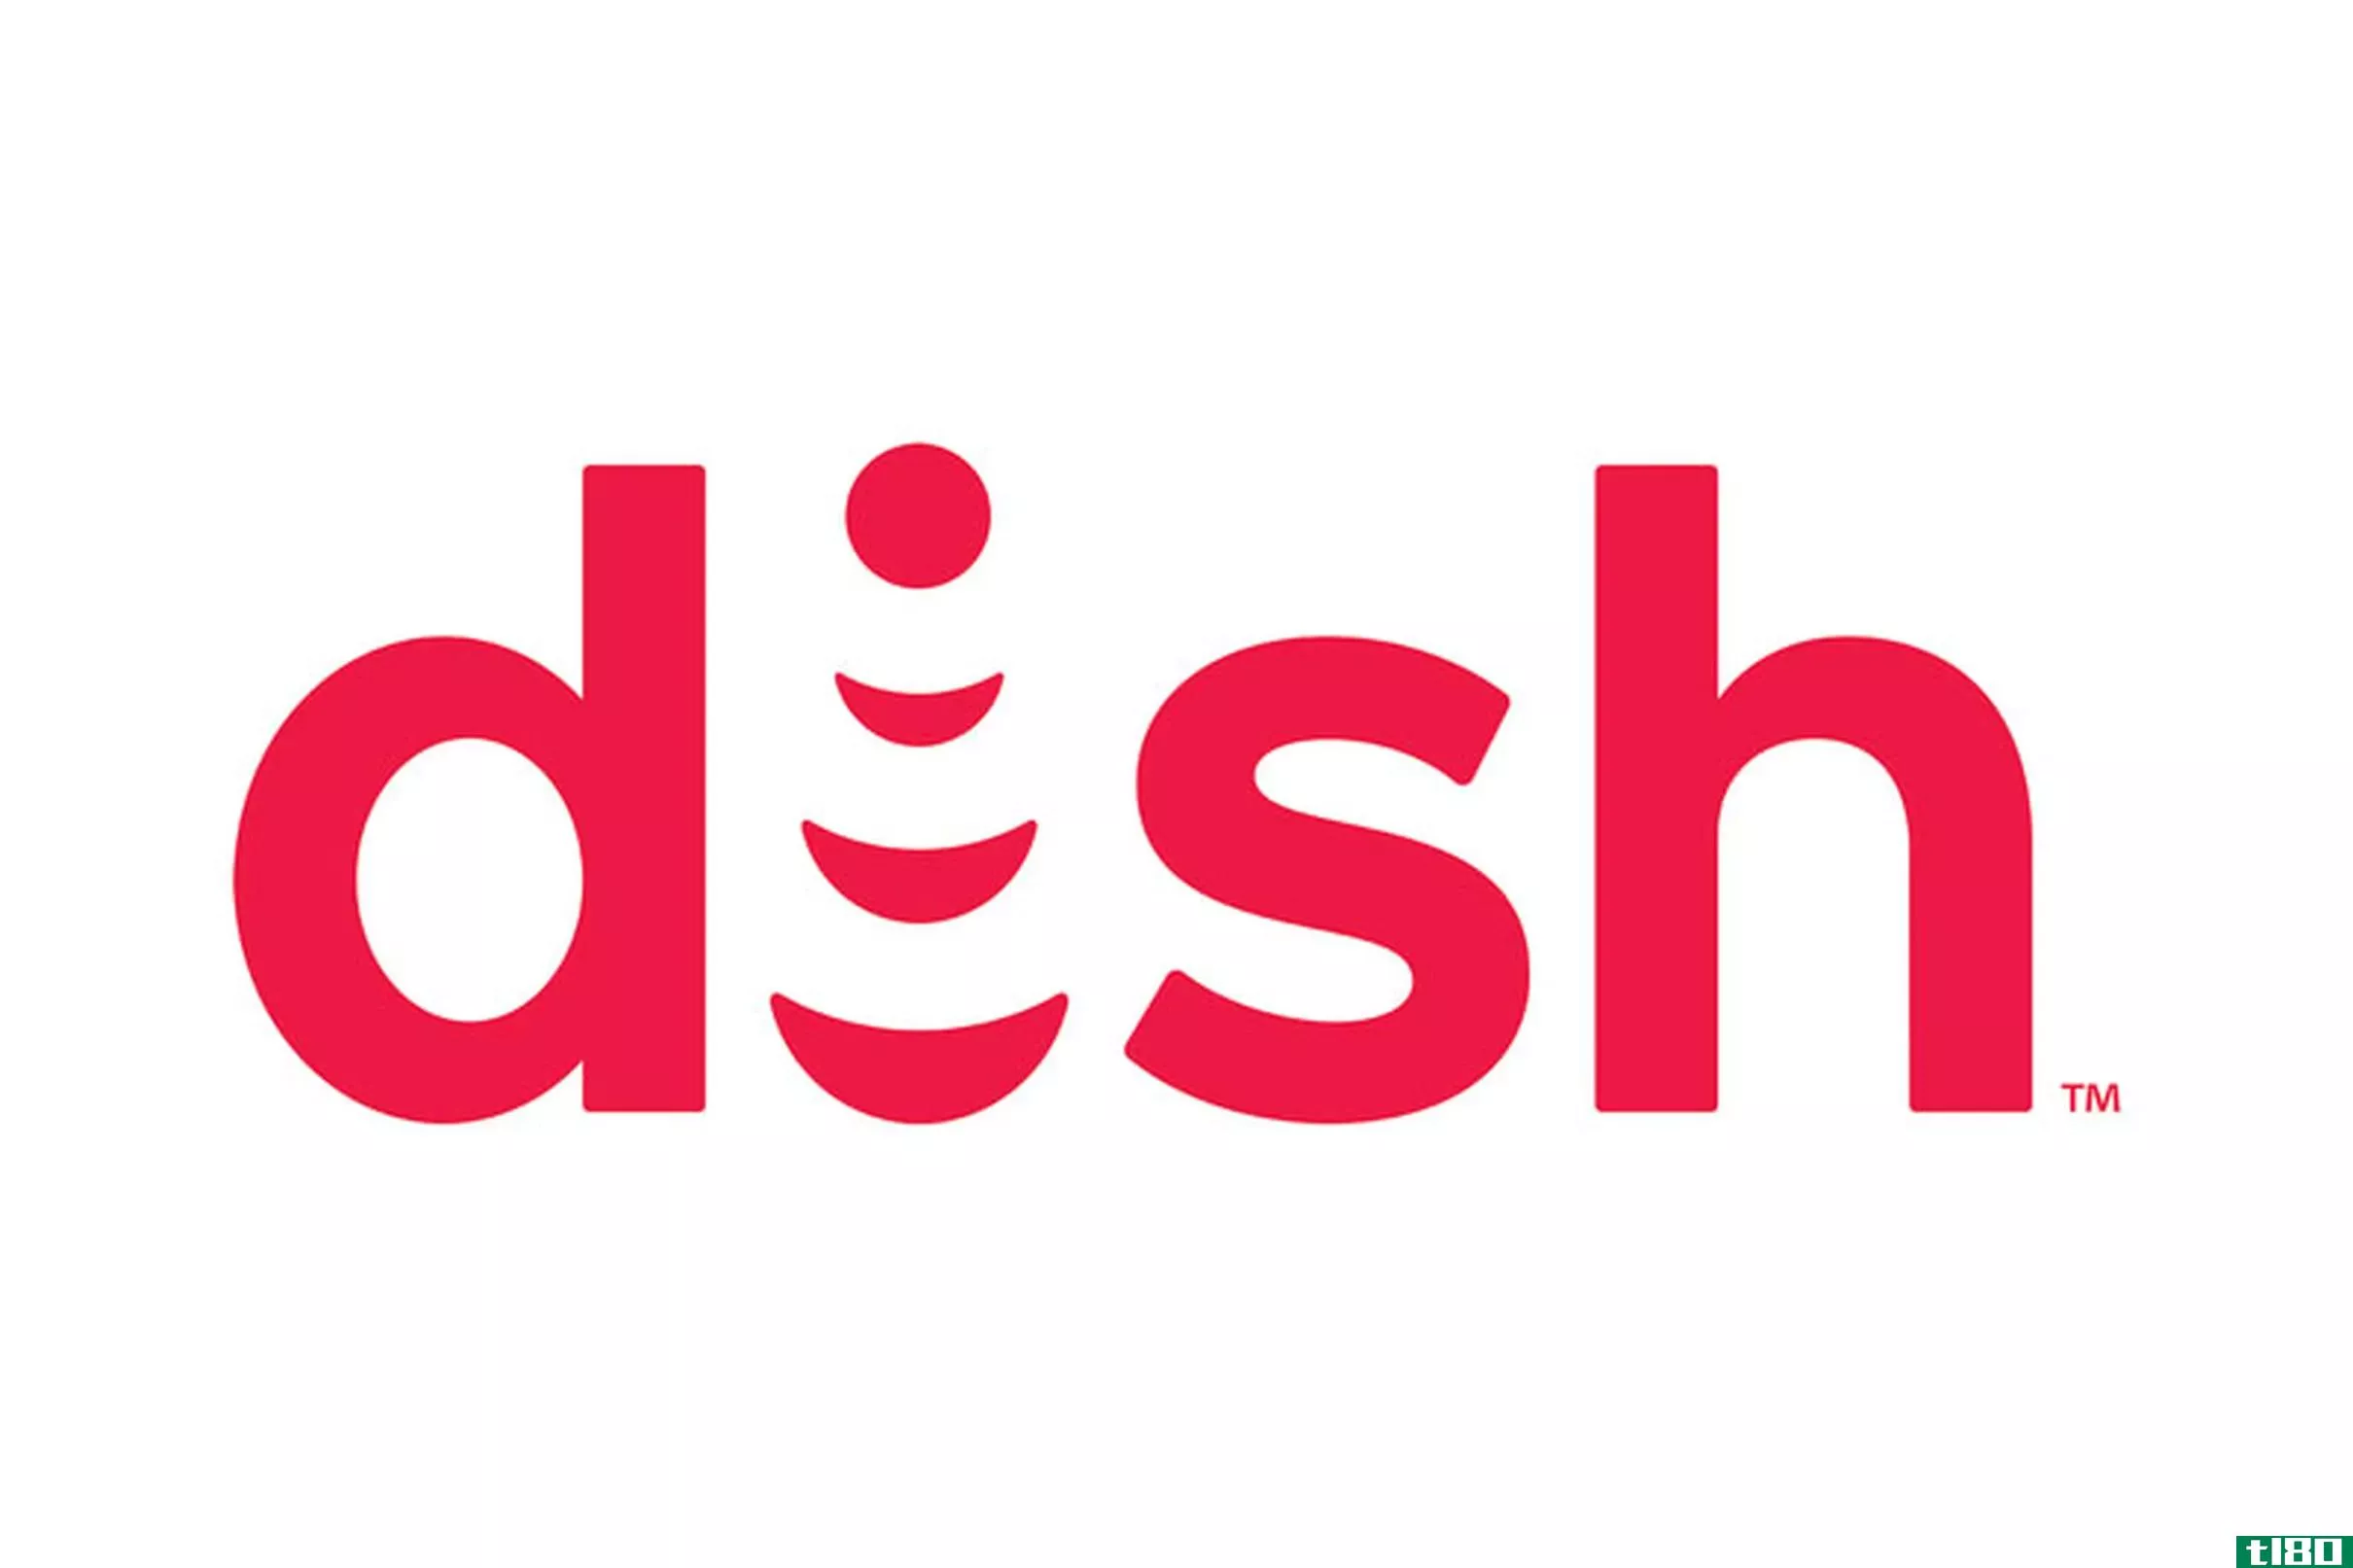 dish进入无线服务的下一步是收购另一家小型供应商